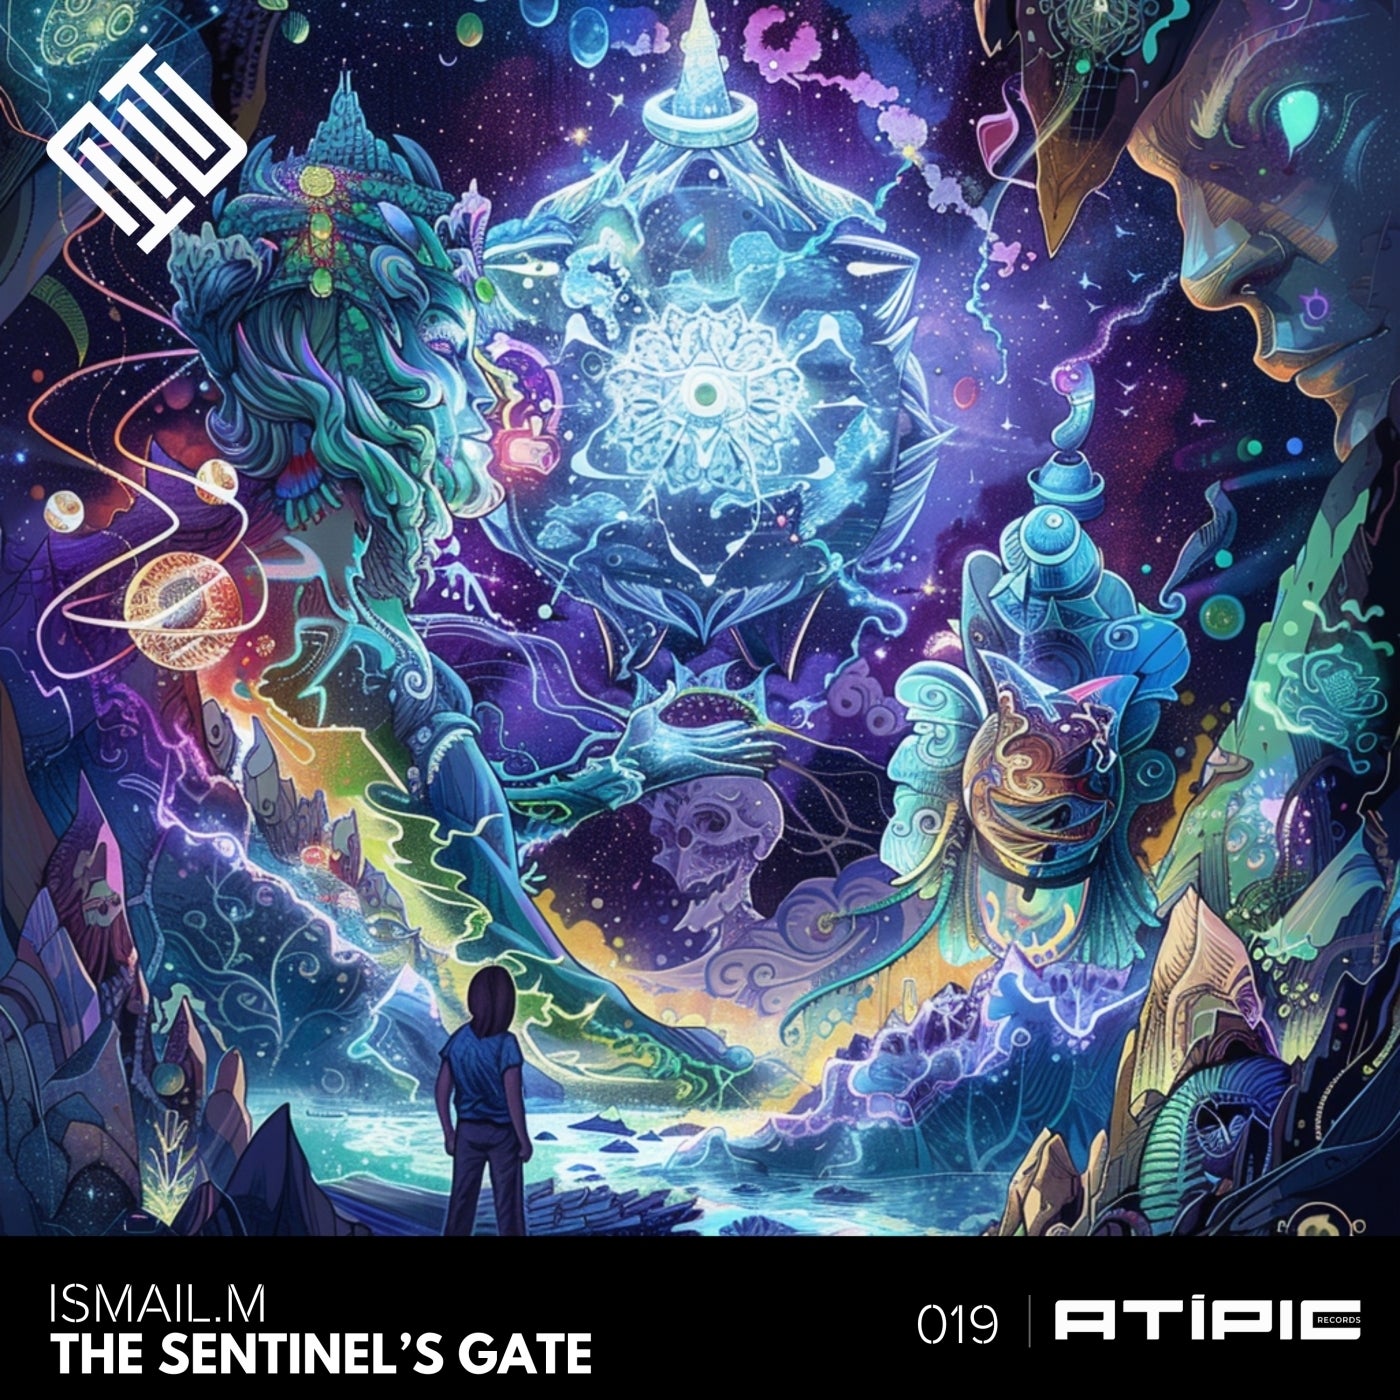 The Sentinel's Gate